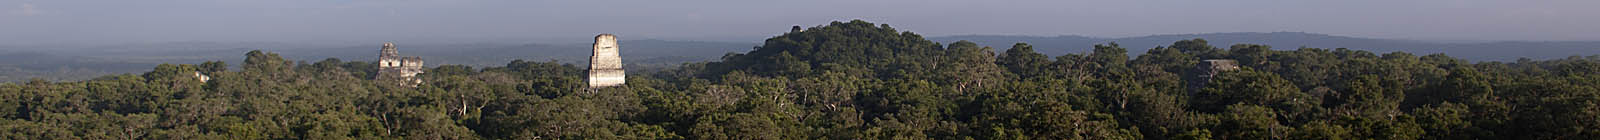 Guatemala, Tikal - Banner